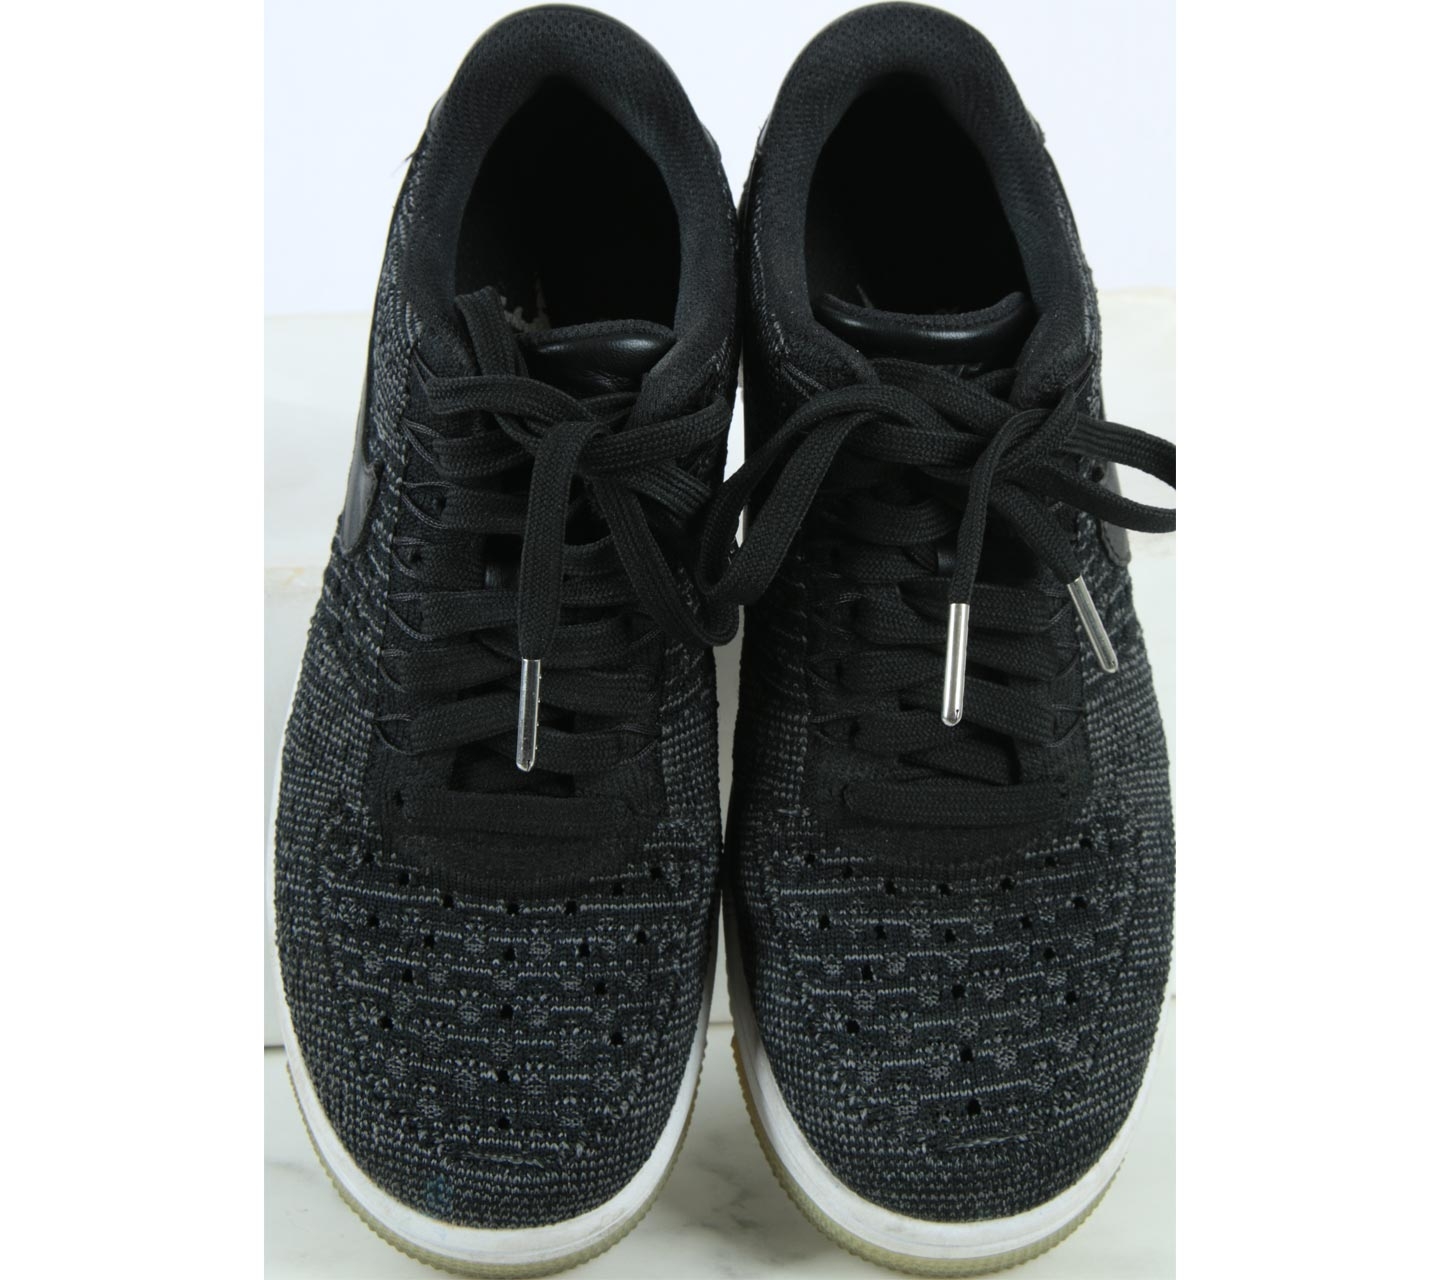 Nike Black Fly Knit Low Sneakers